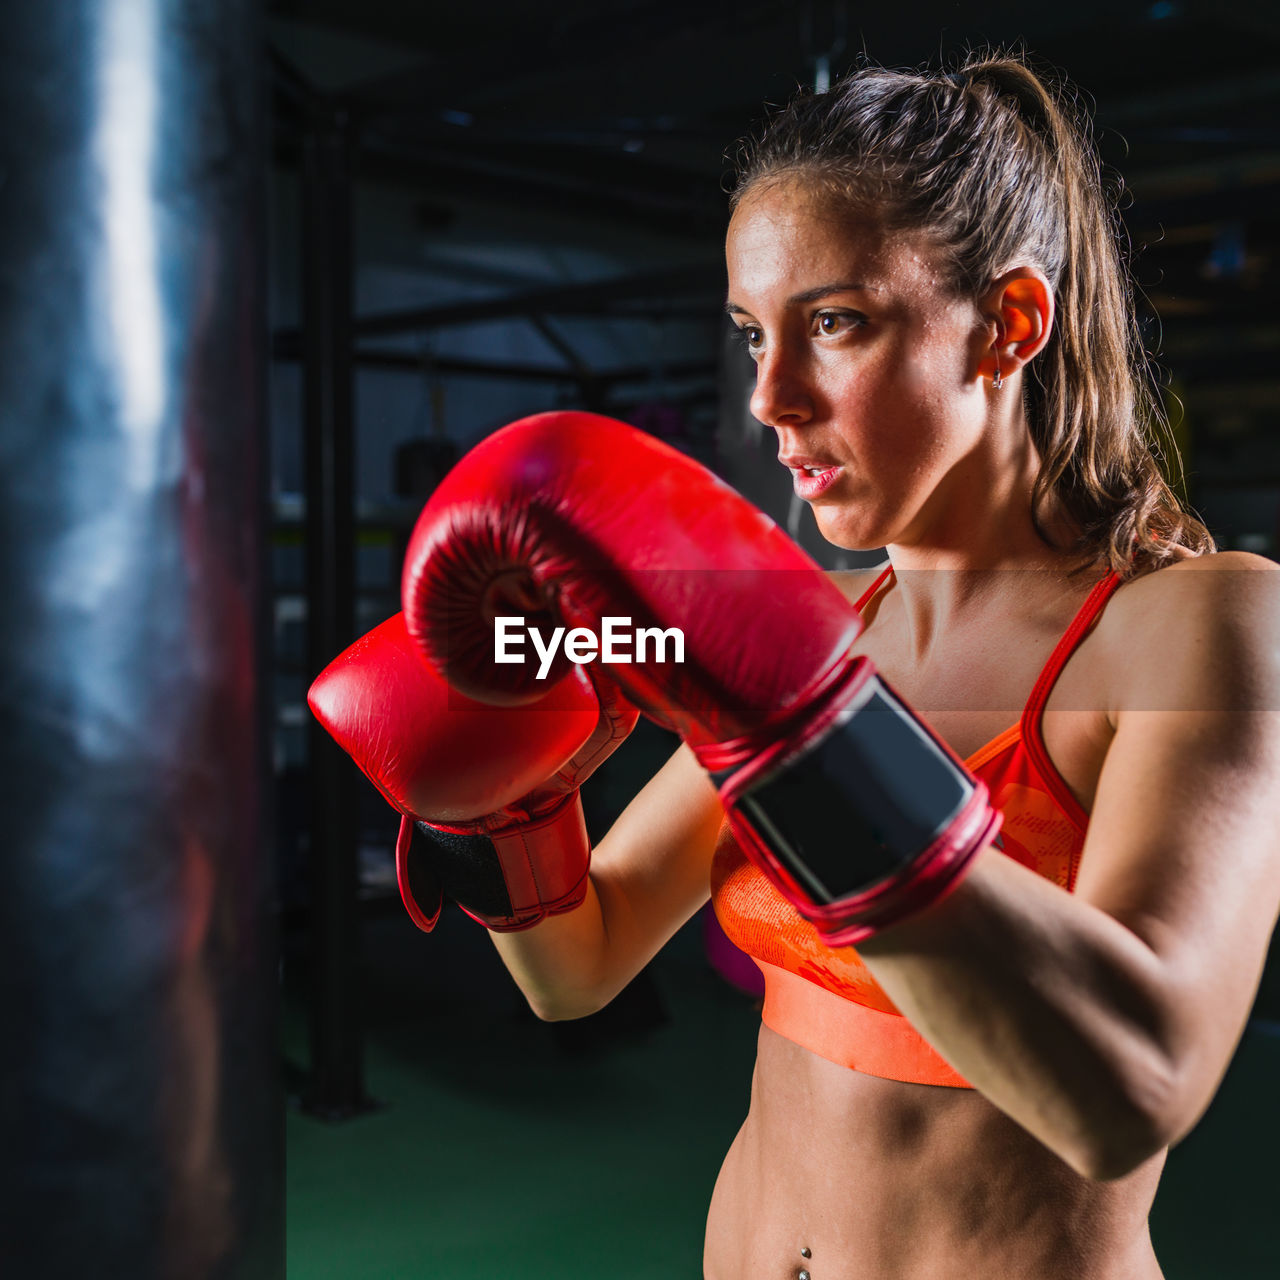 Female boxer punching bag in gym